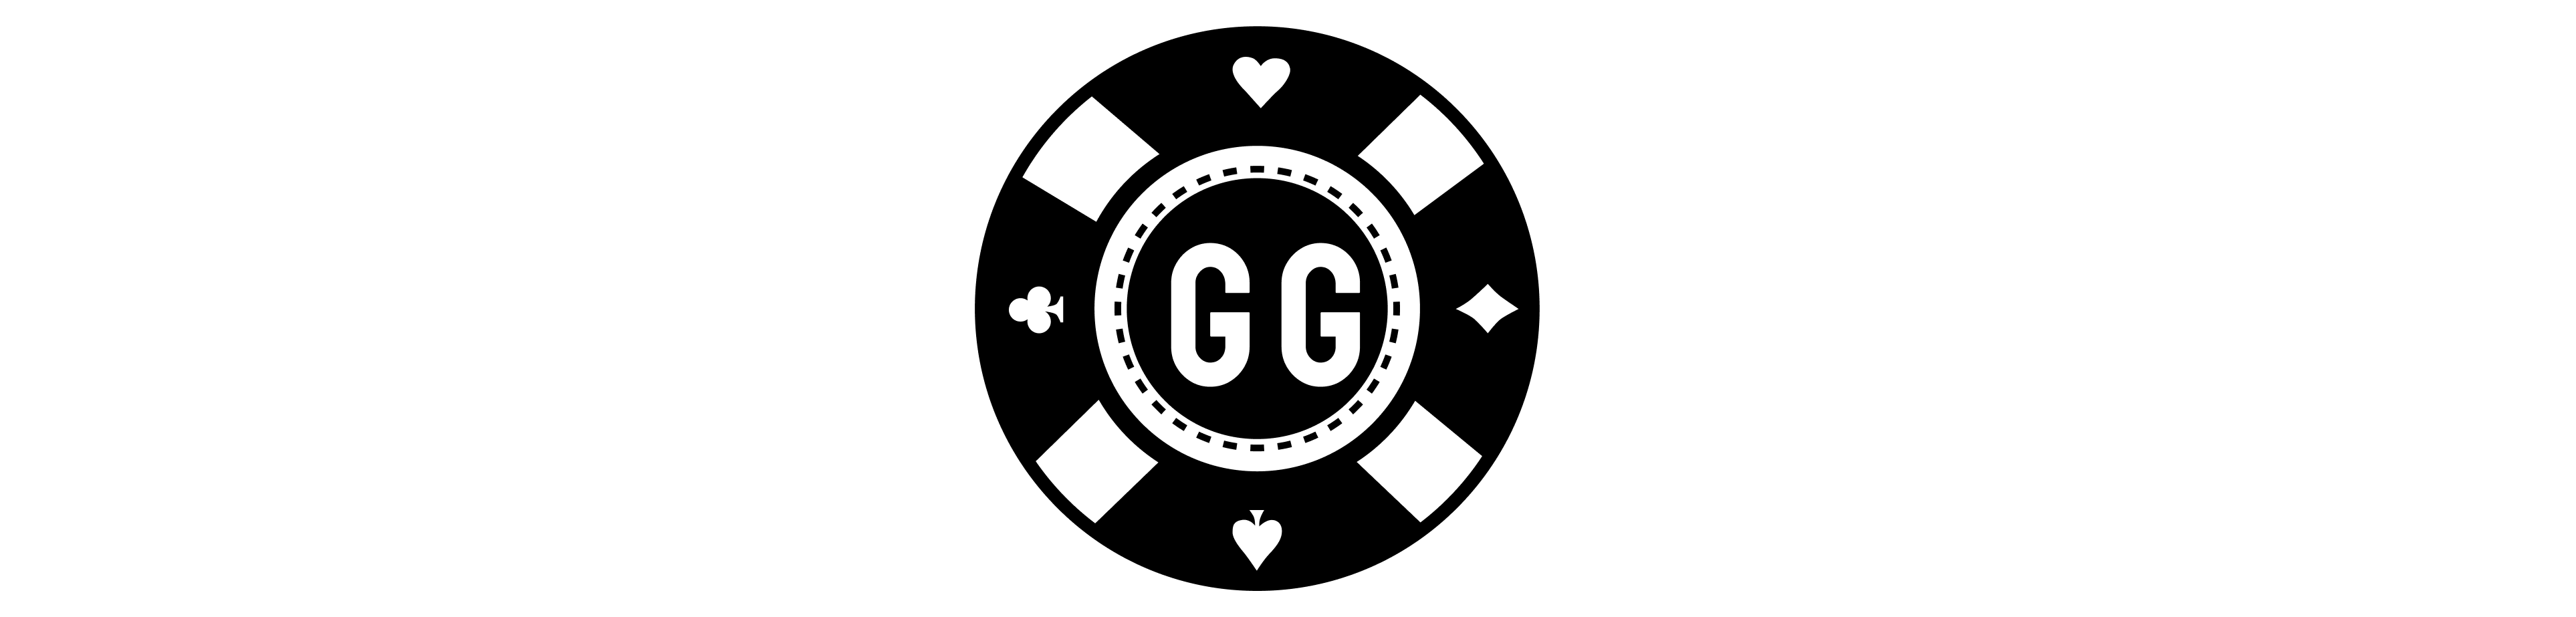 onlinekazino.gg logo